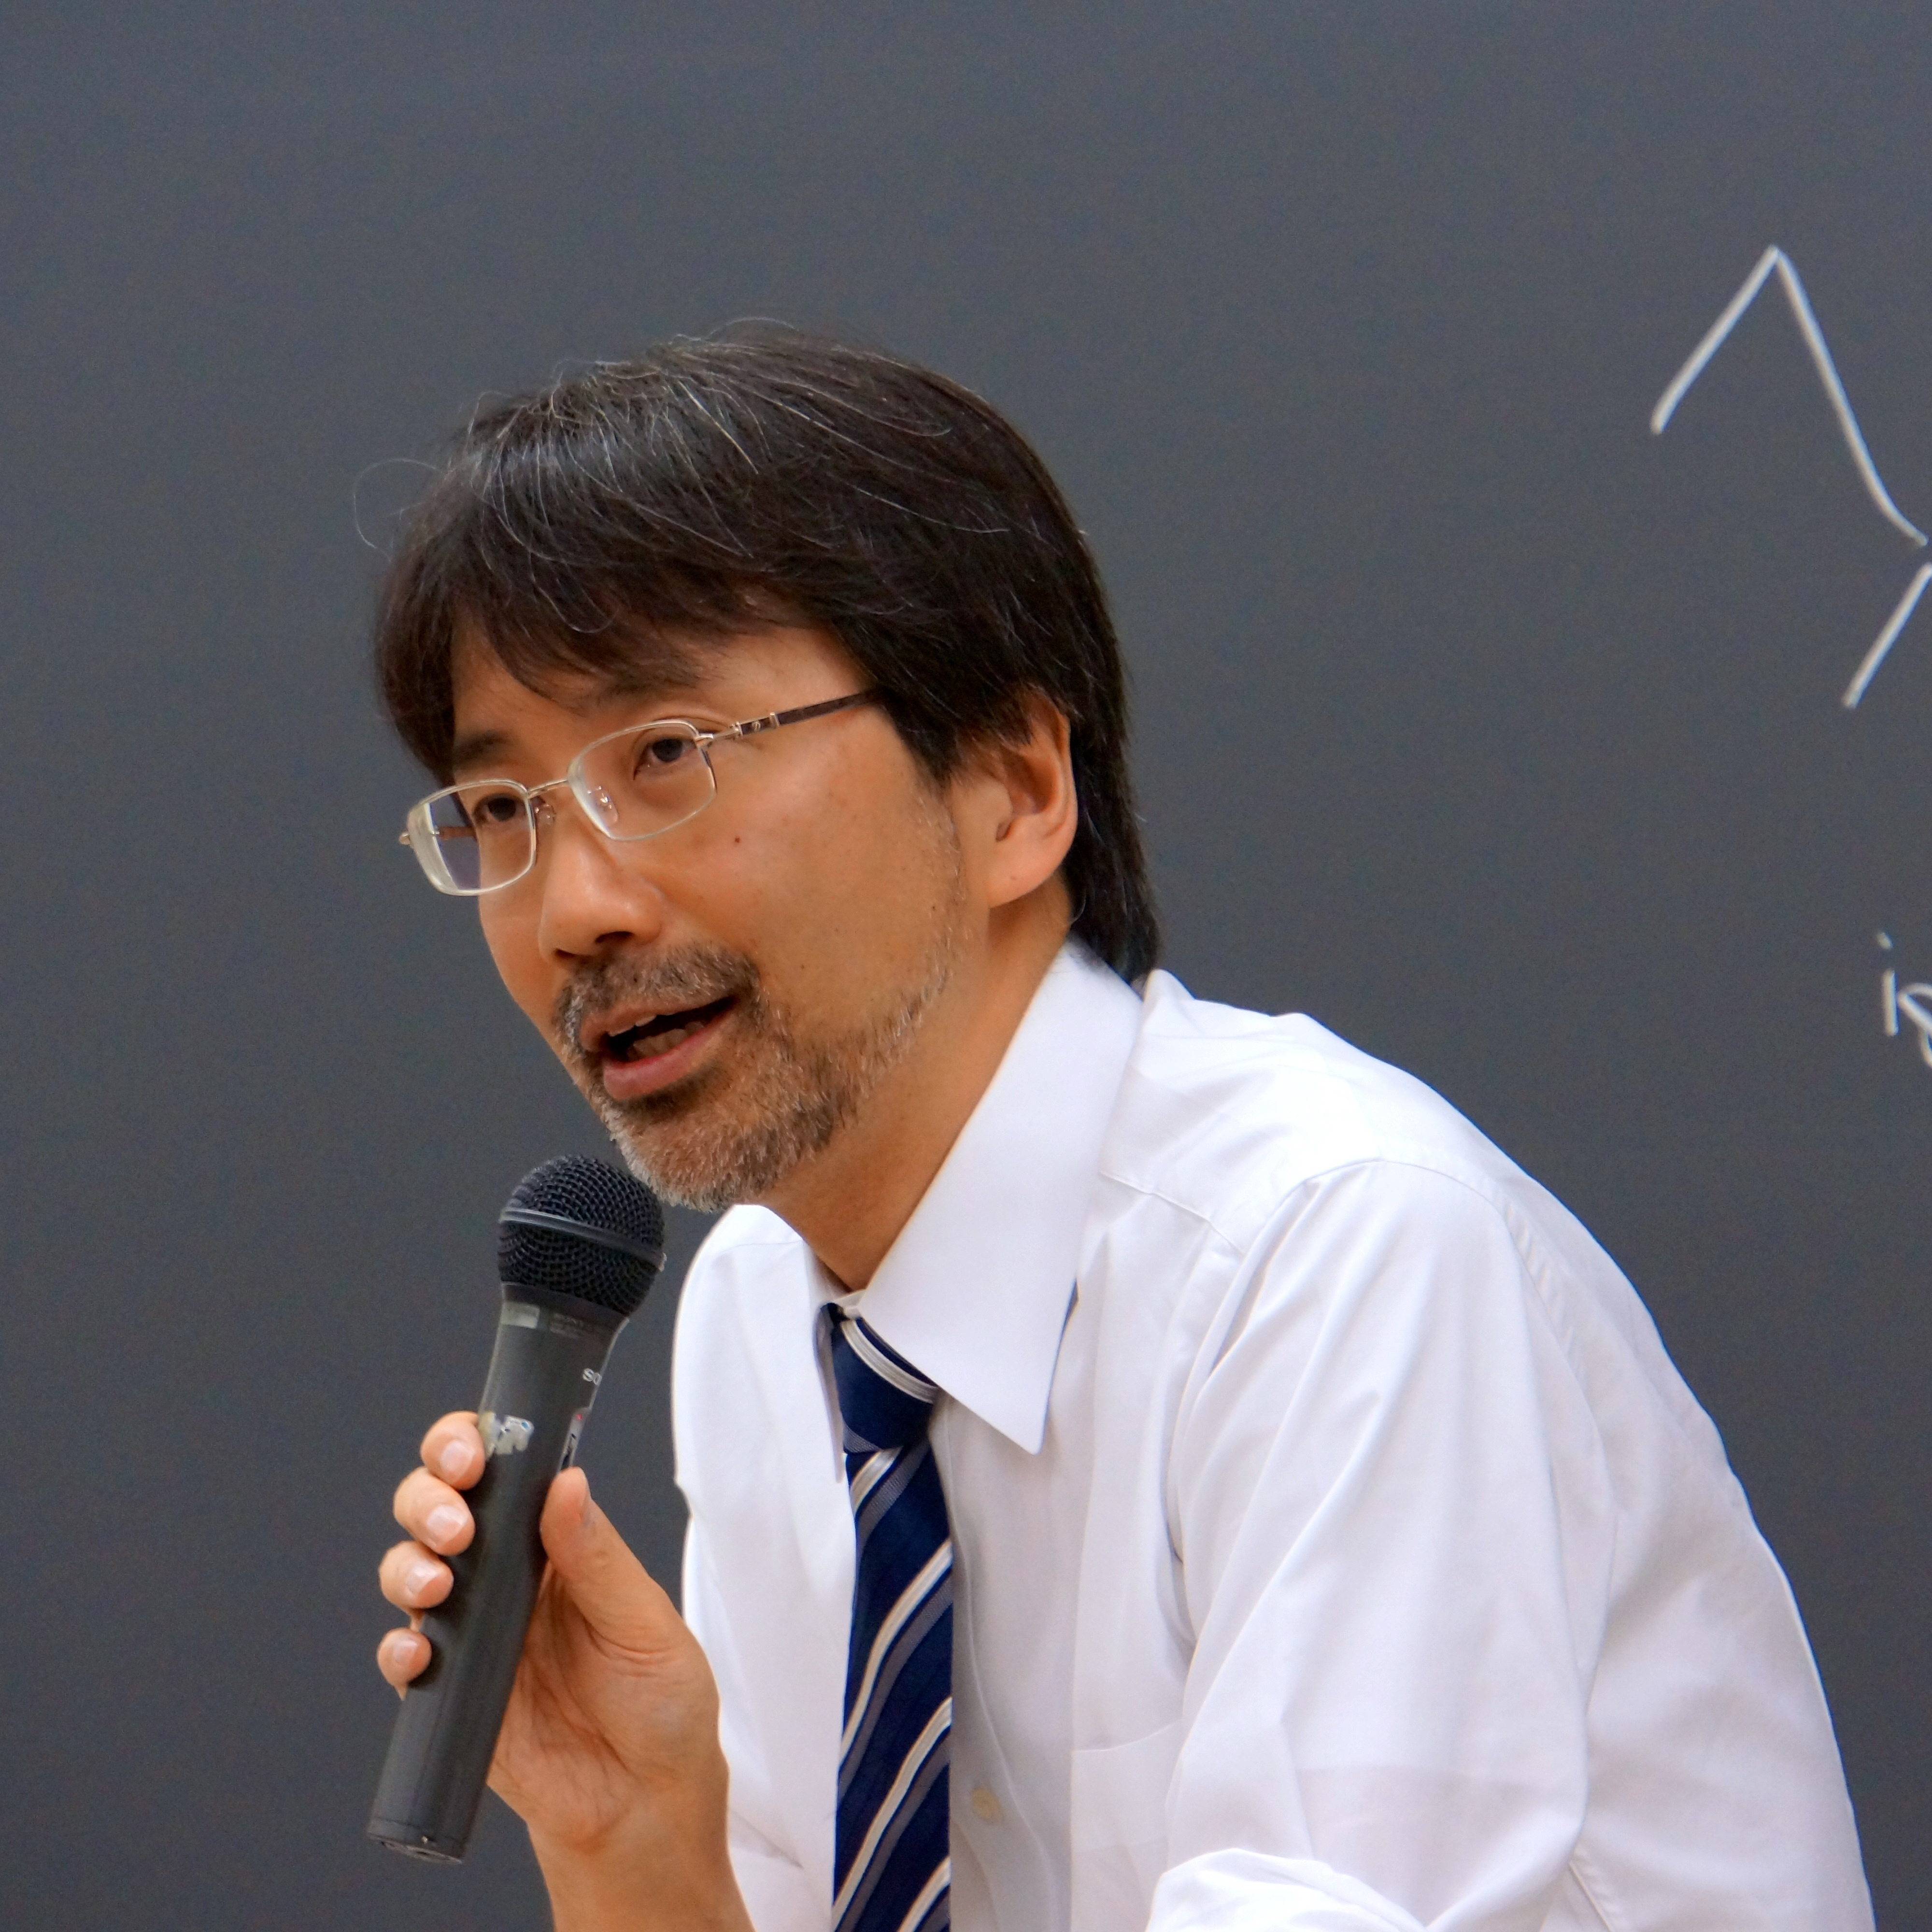 Professor Hisatsugu Kitahara